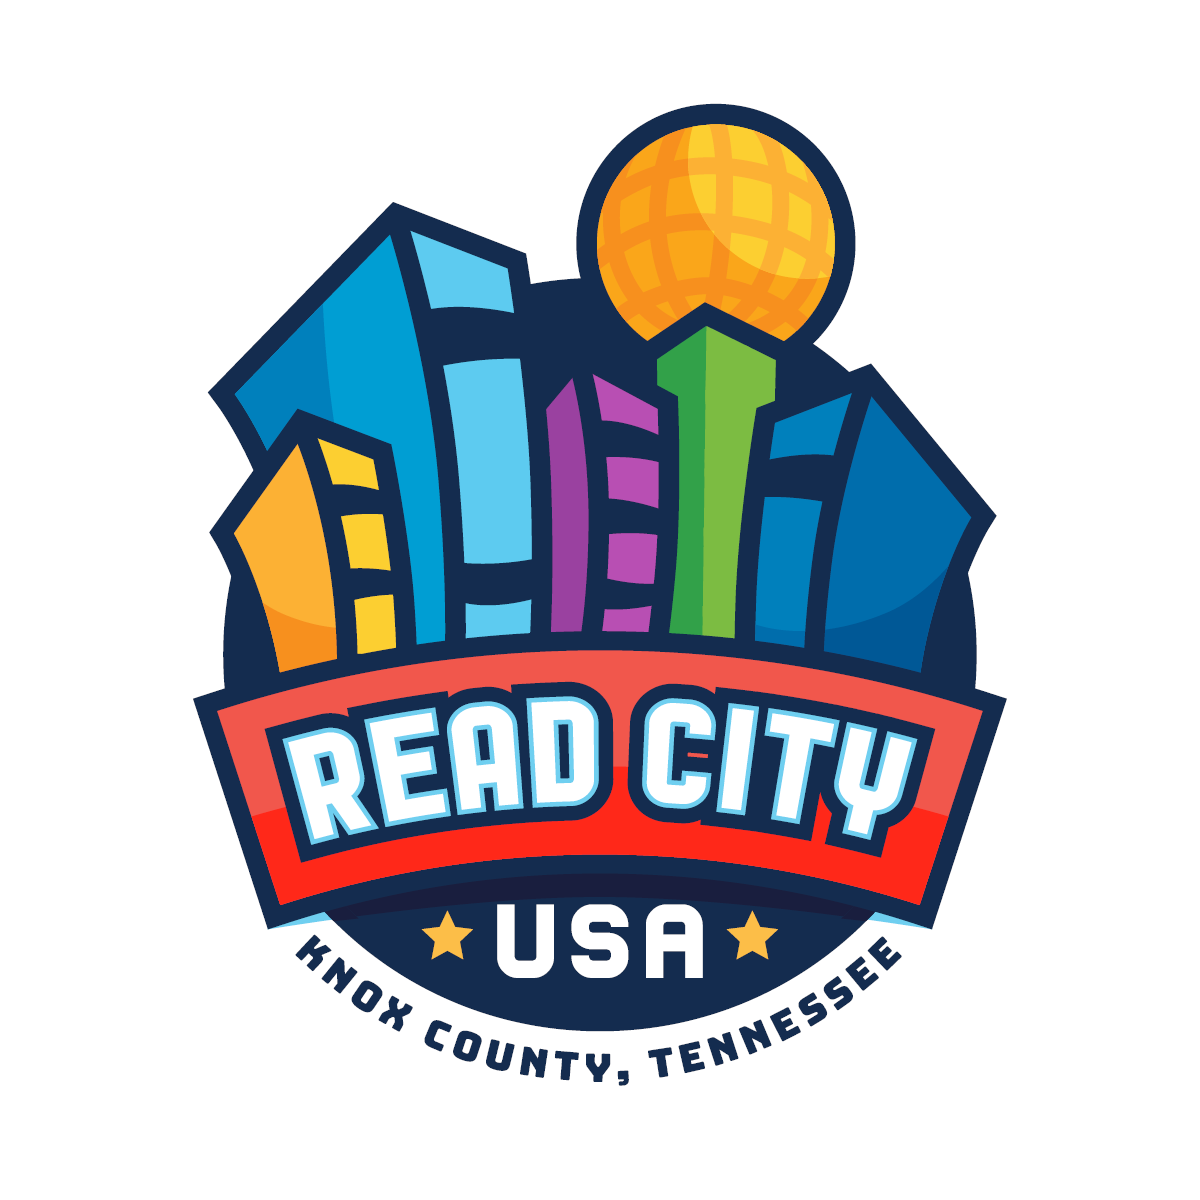 read city usa - knox county tennessee logo